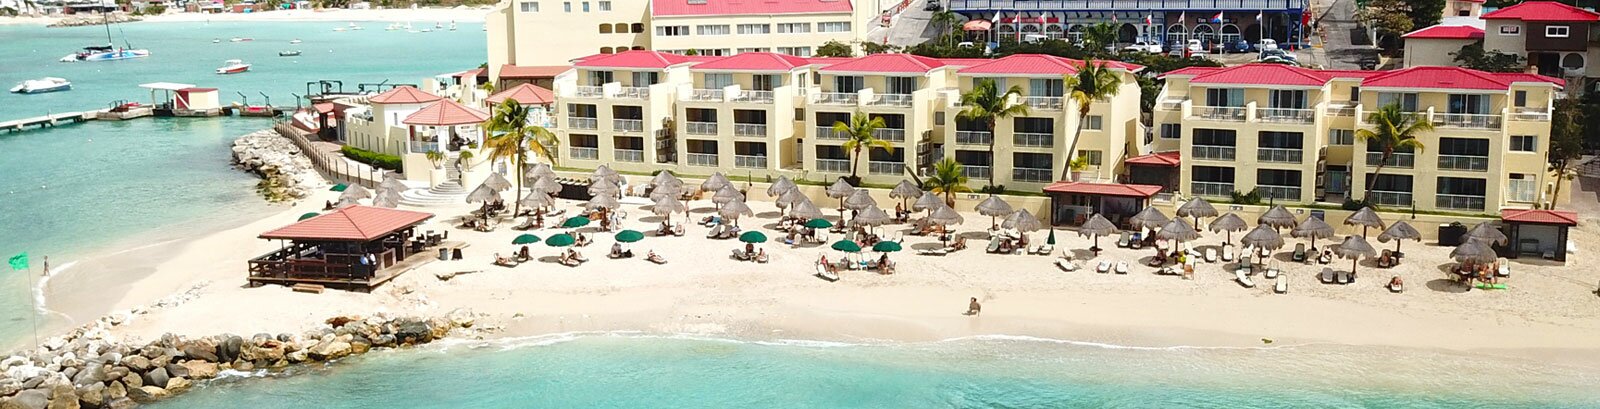 Simpson Bay Resort & Marina, St. Maarten Suites rénovées